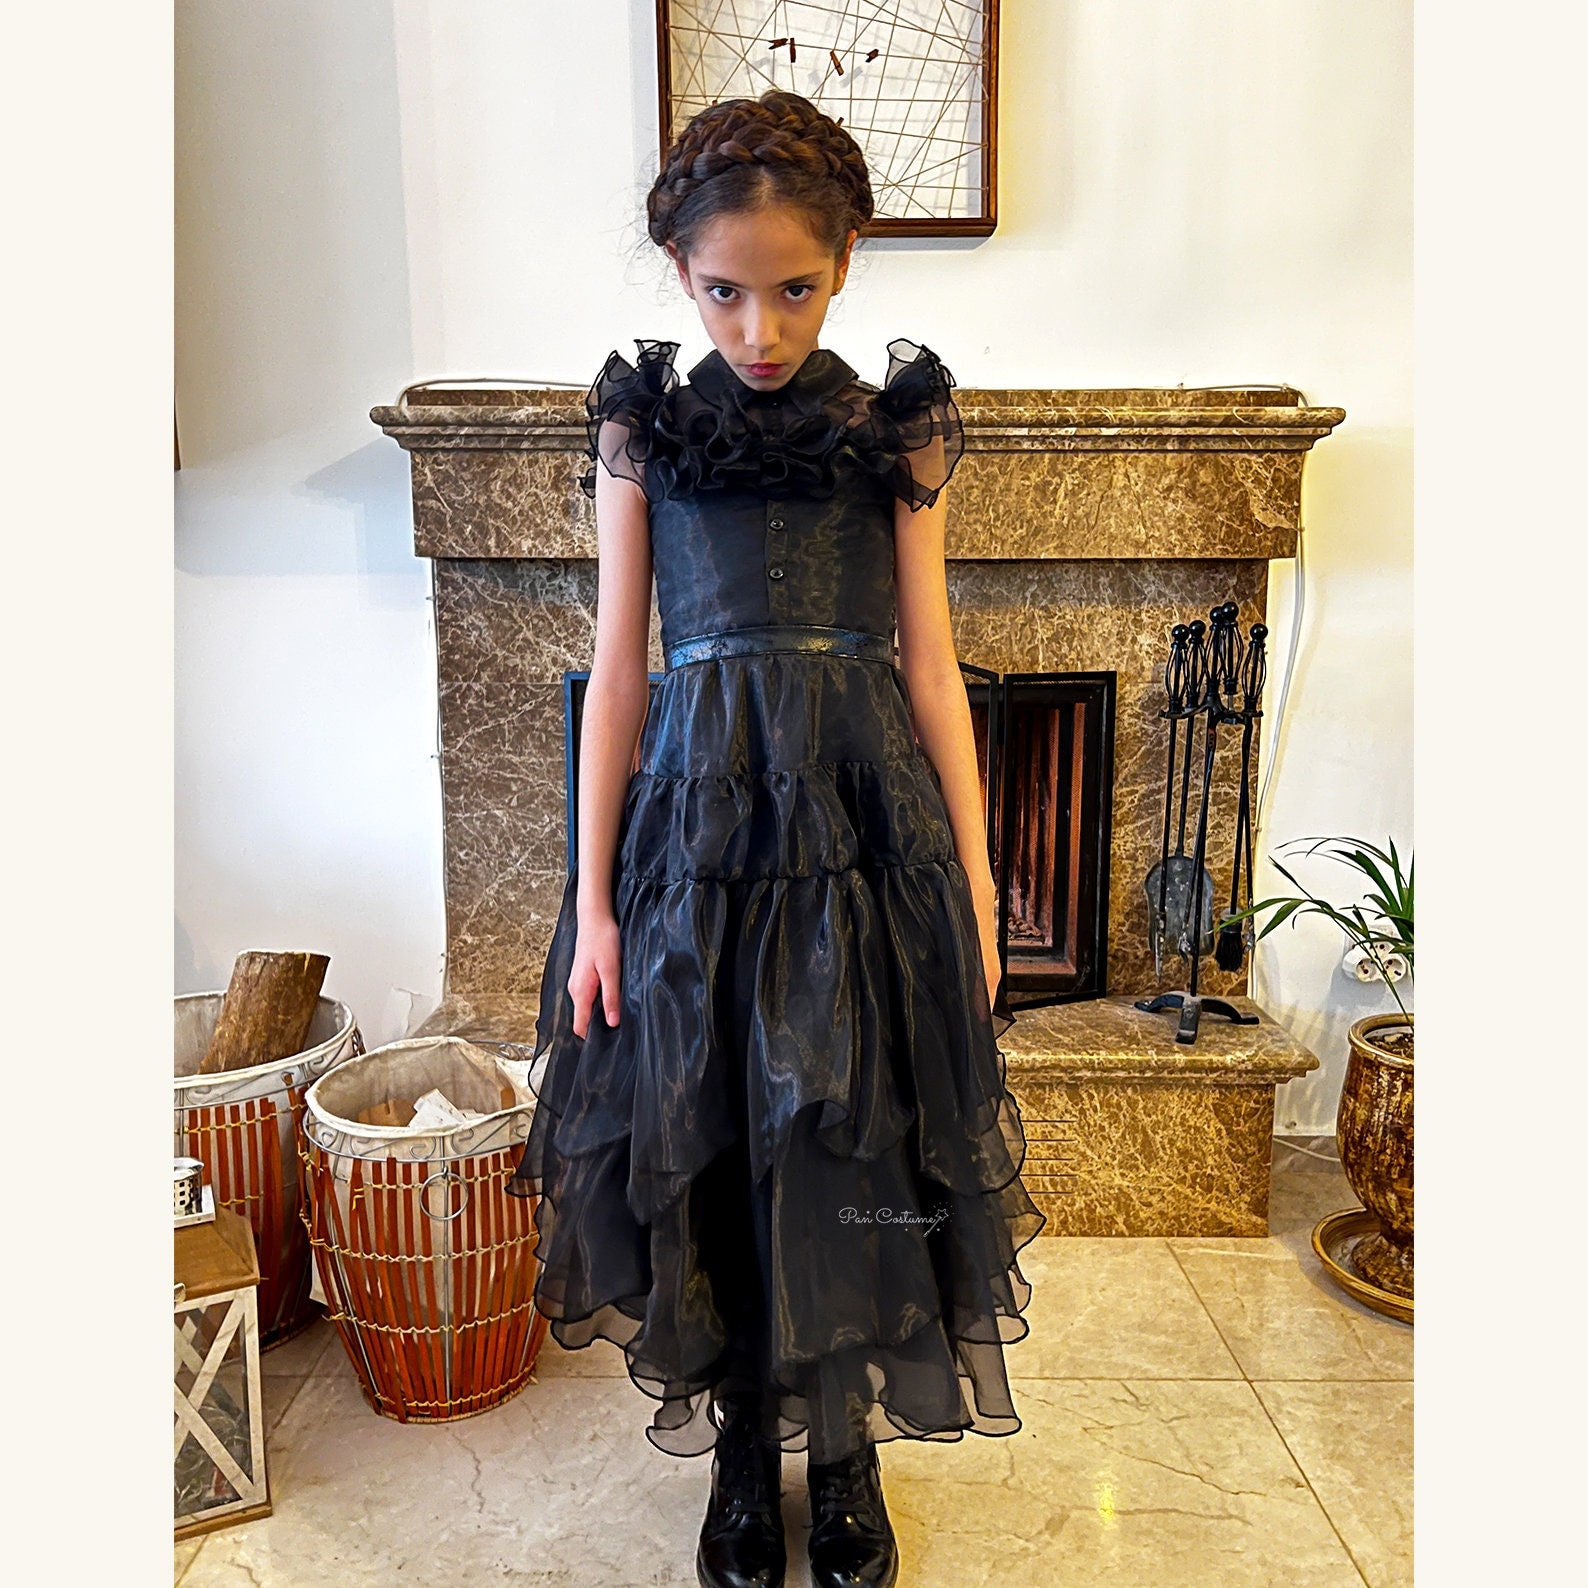 Wednesday Addams Costume, Wednesday Prom Dress 